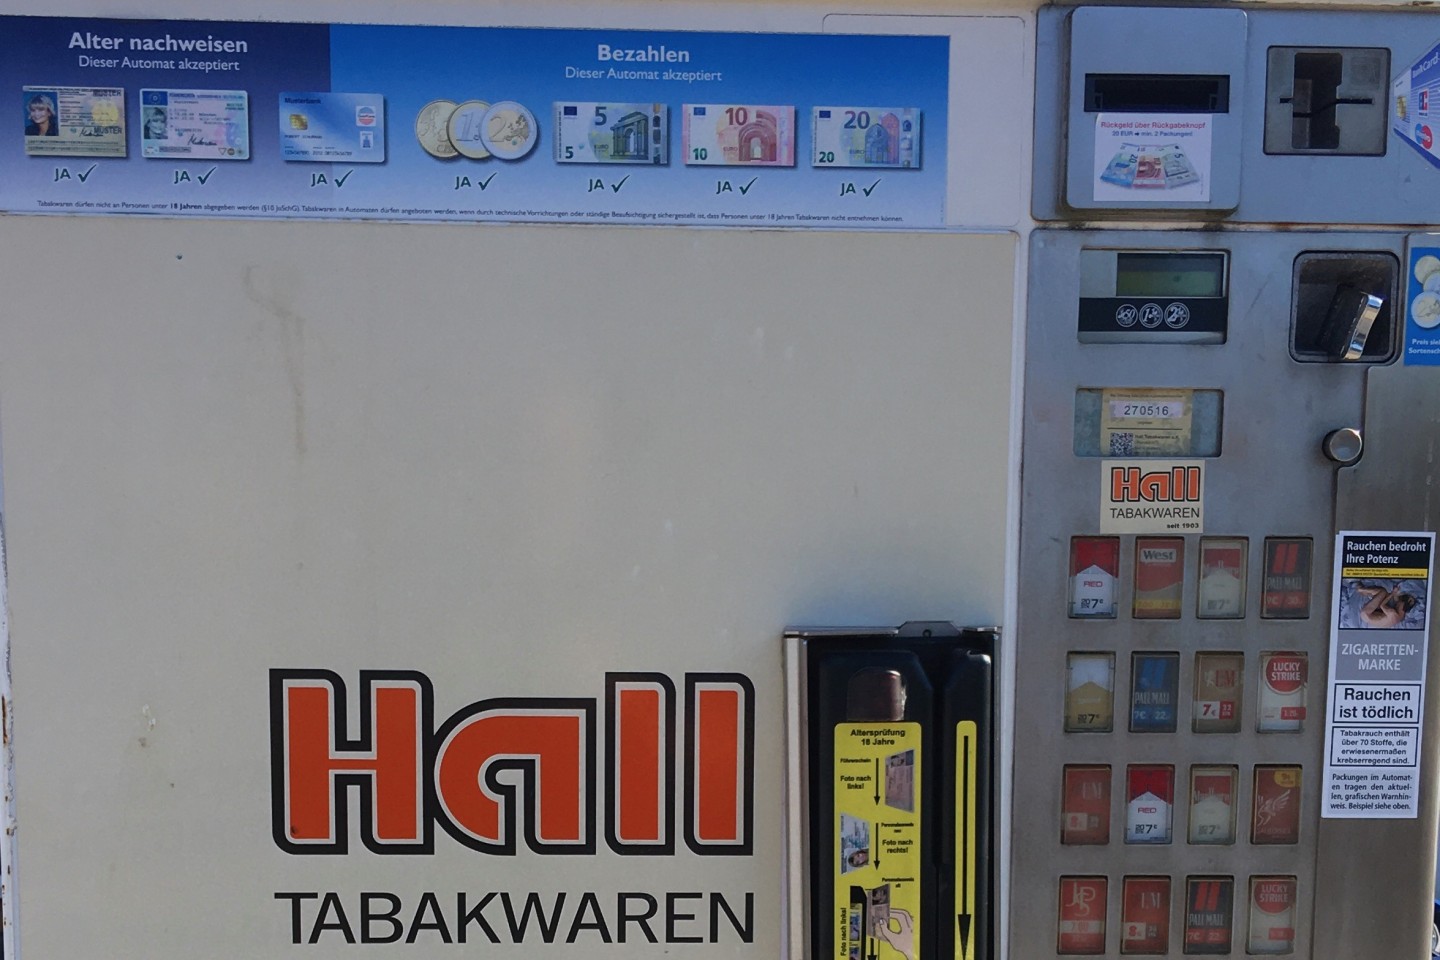 Warenautomaten - Zigarettenautomaten in der Kernstadt Bad Driburg